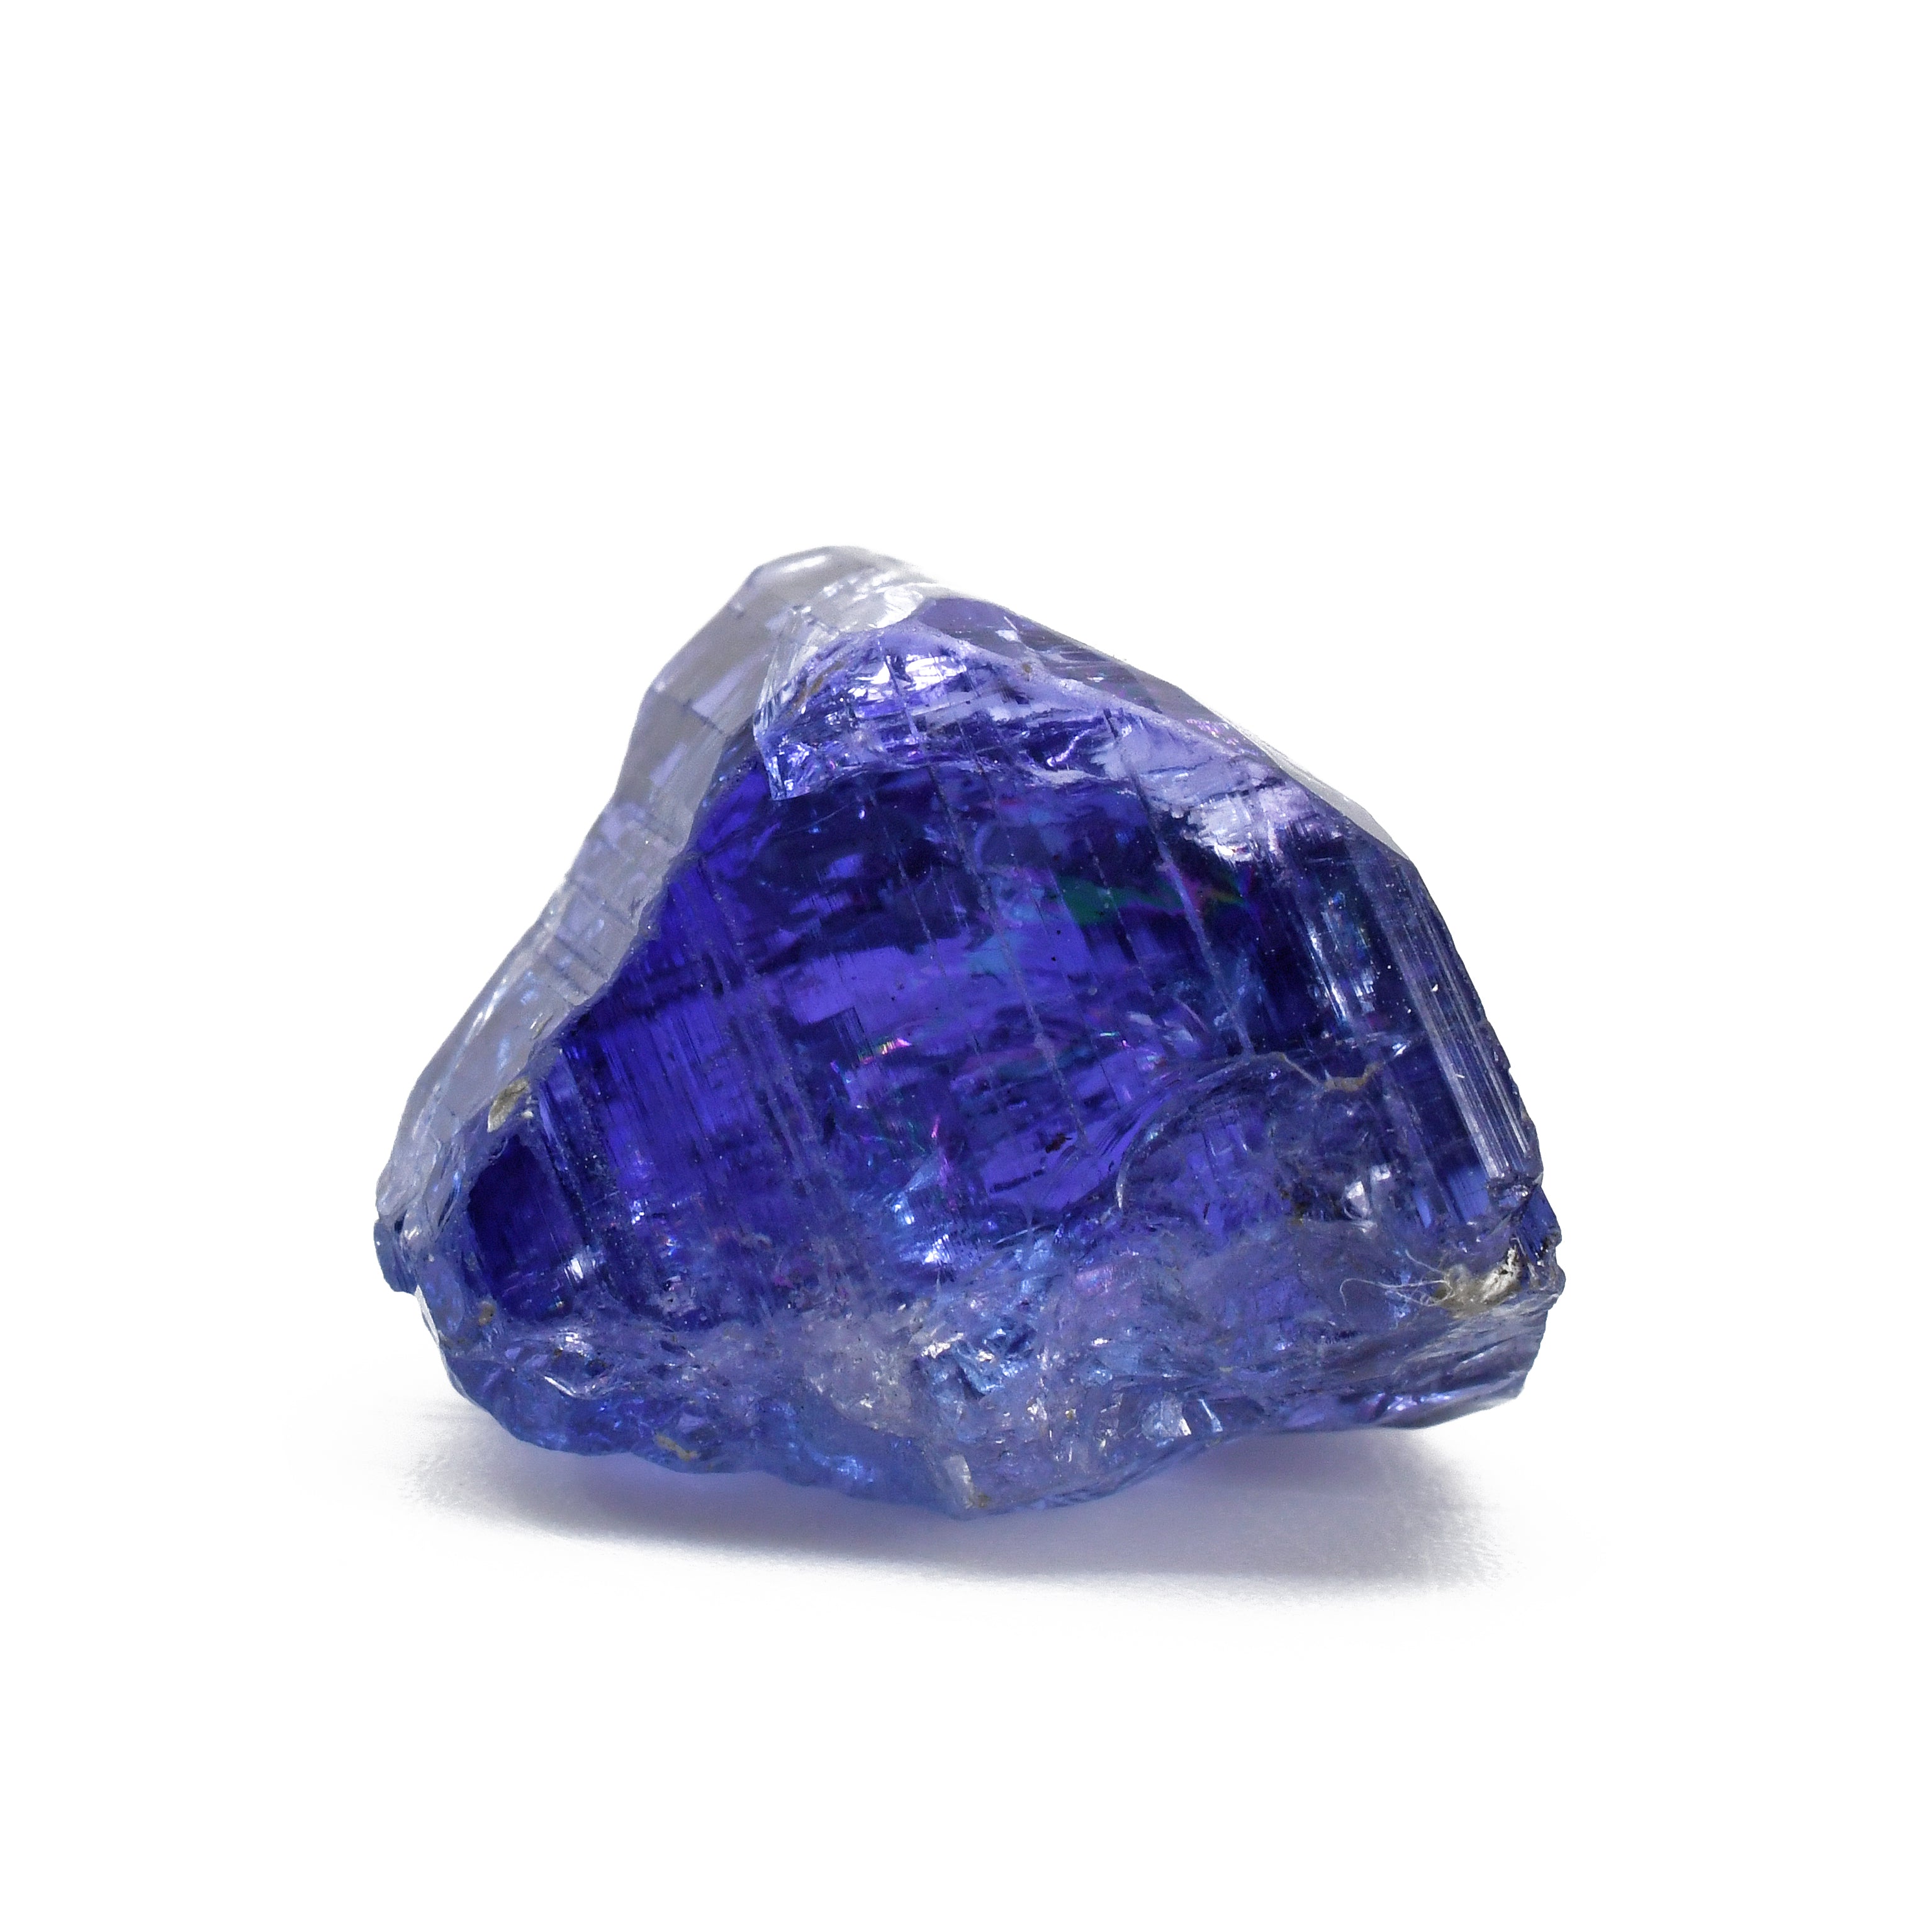 Tanzanite 30.87 ct Natural Gem Crystal Specimen - Tanzania - OX-097 - Crystalarium